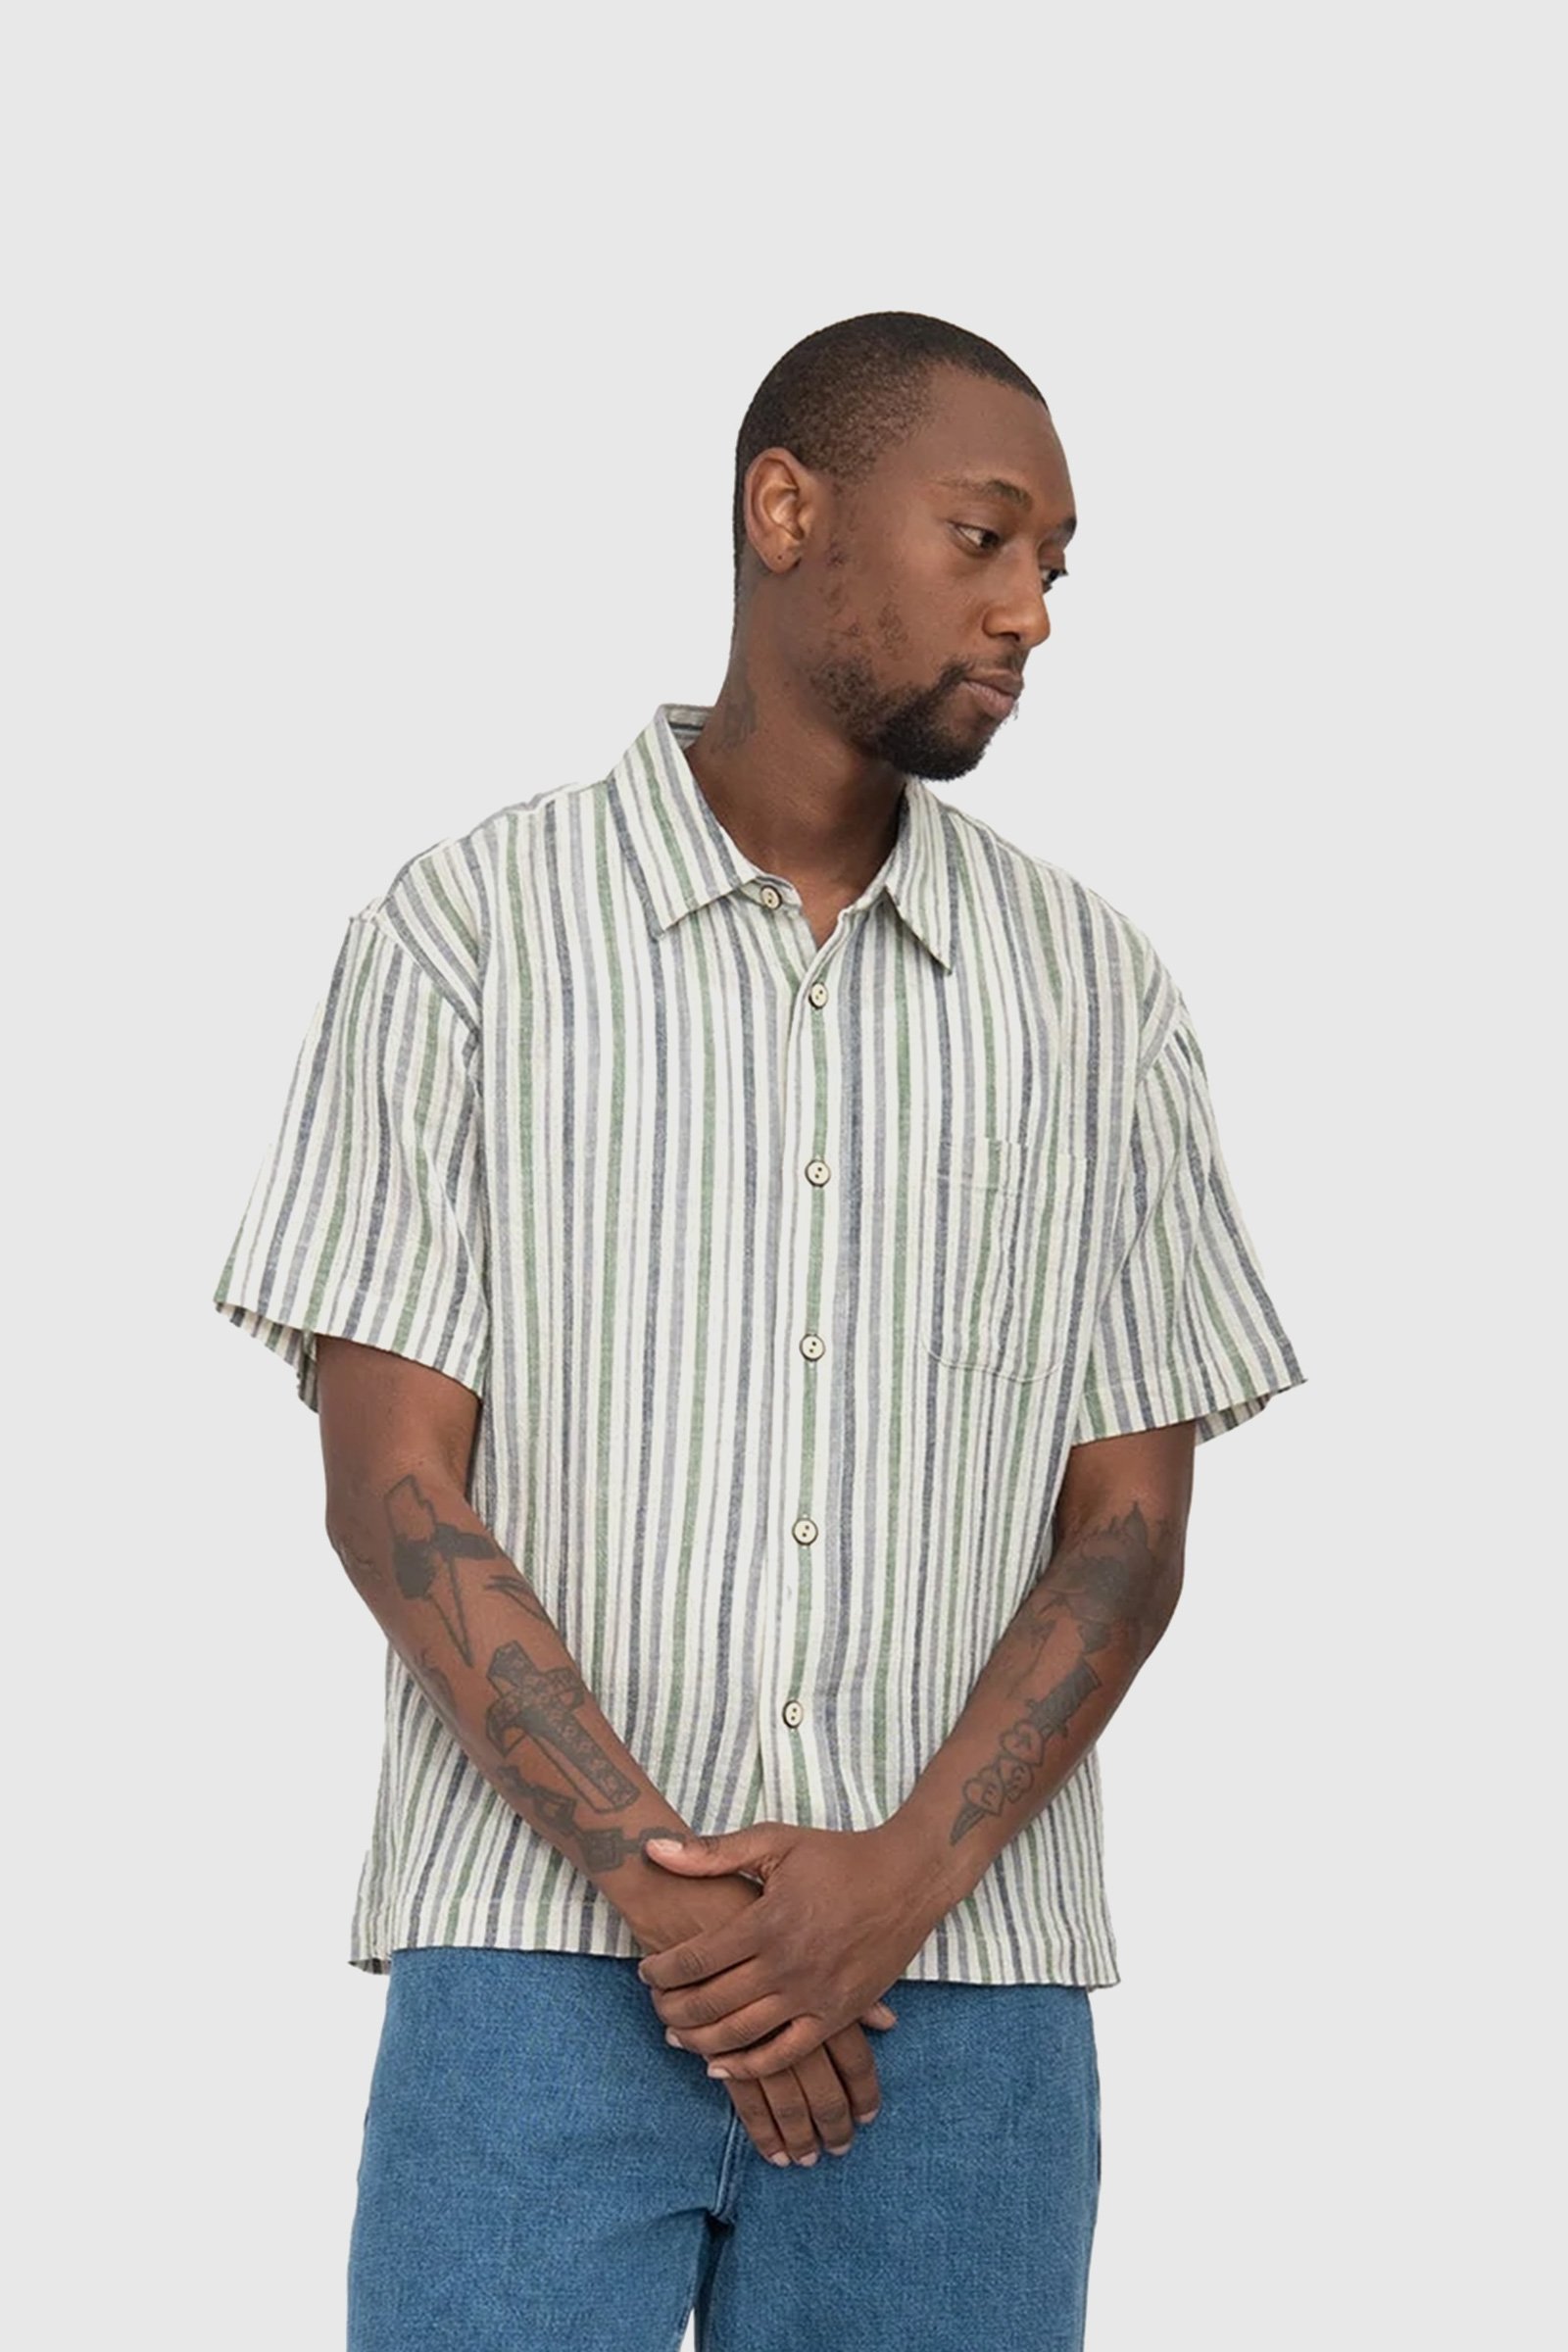 Stüssy Wrinkly Cotton Gauze Shirt Stripe | WoodWood.com